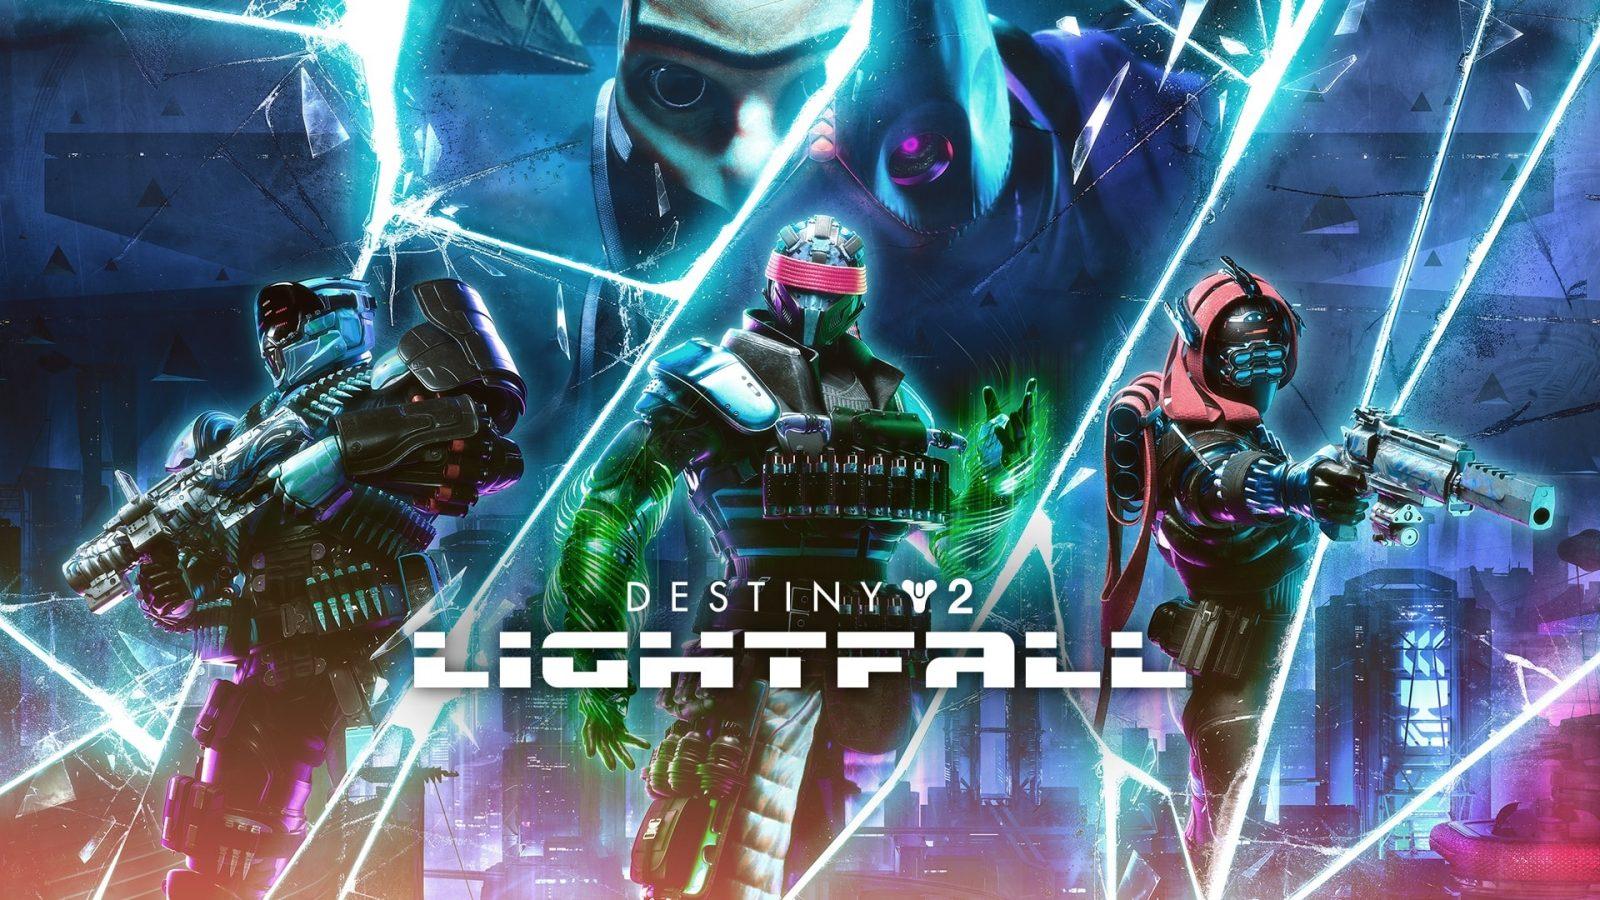 Destiny 2 Lightfall key art showing key characters behind the expansion's logo